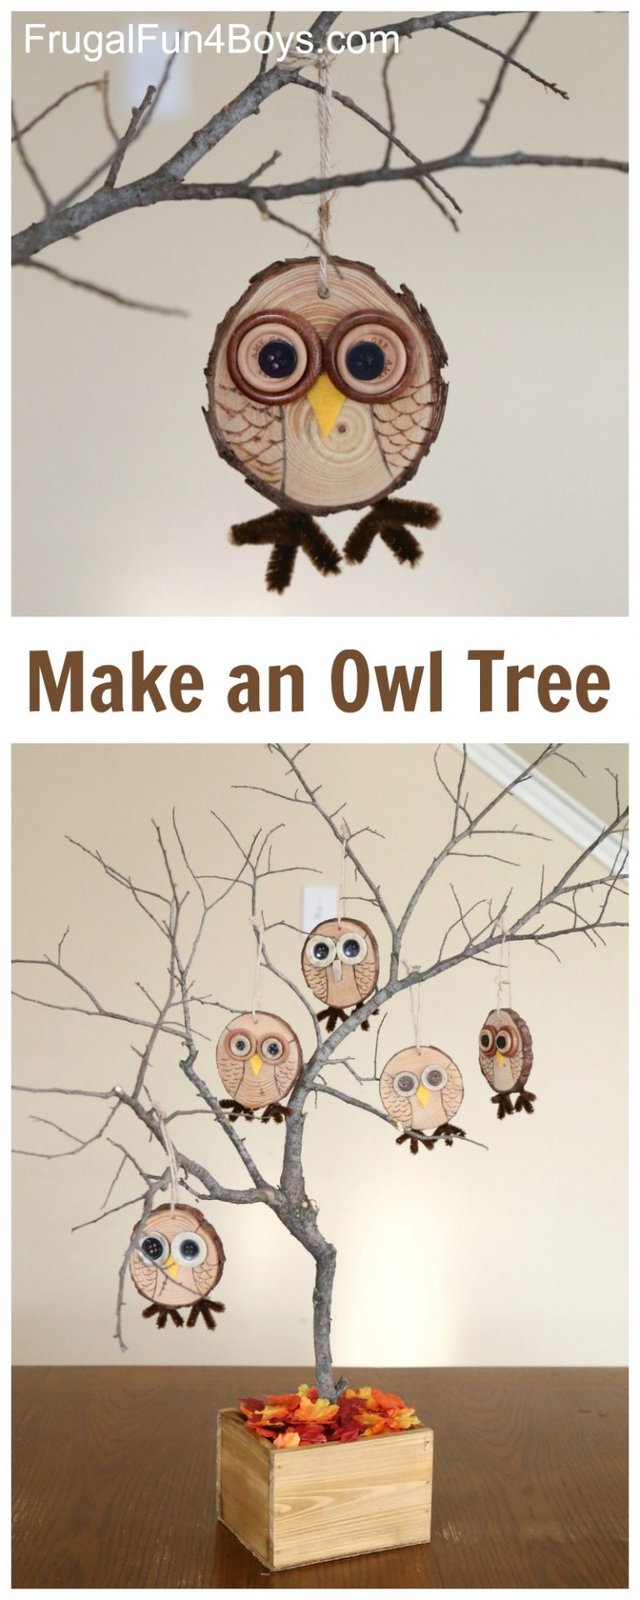 Owl-Tree-Better-Pin-768x1920.jpg